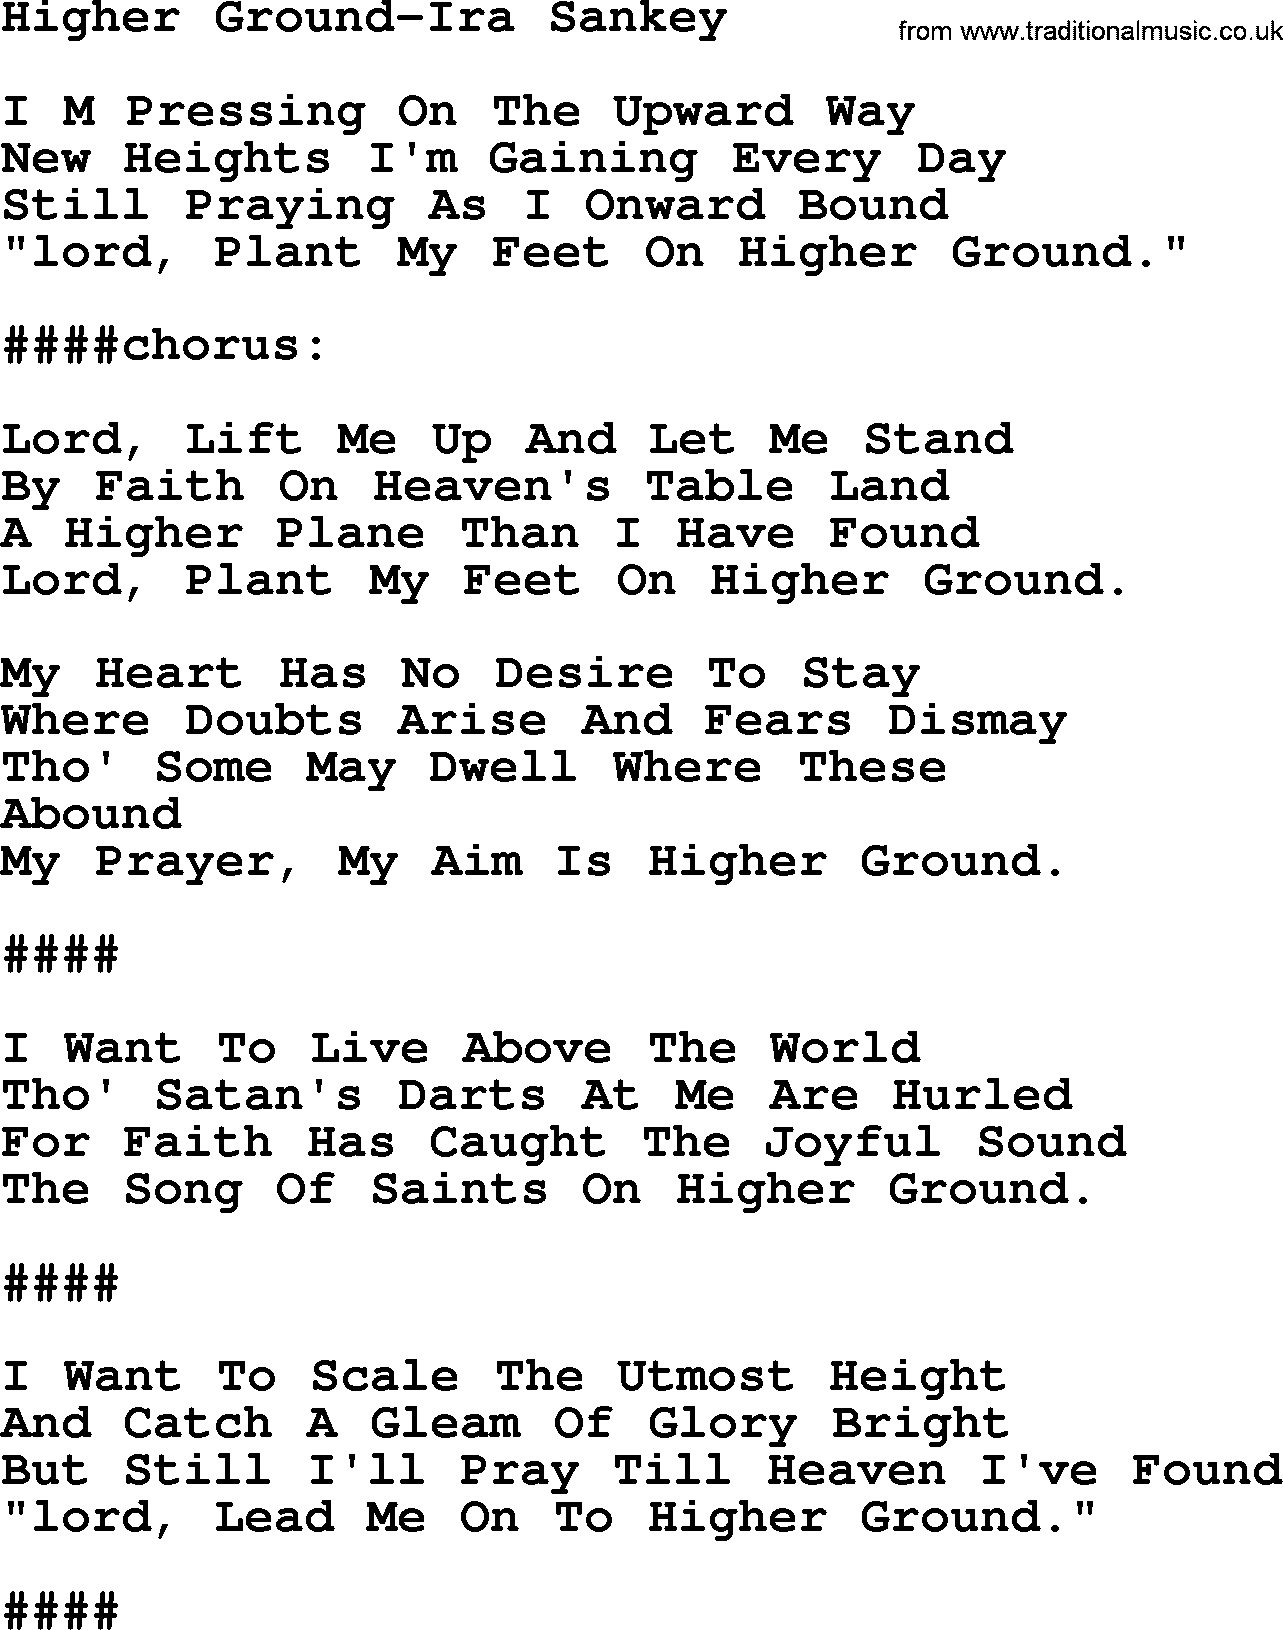 Ira Sankey hymn: Higher Ground-Ira Sankey, lyrics